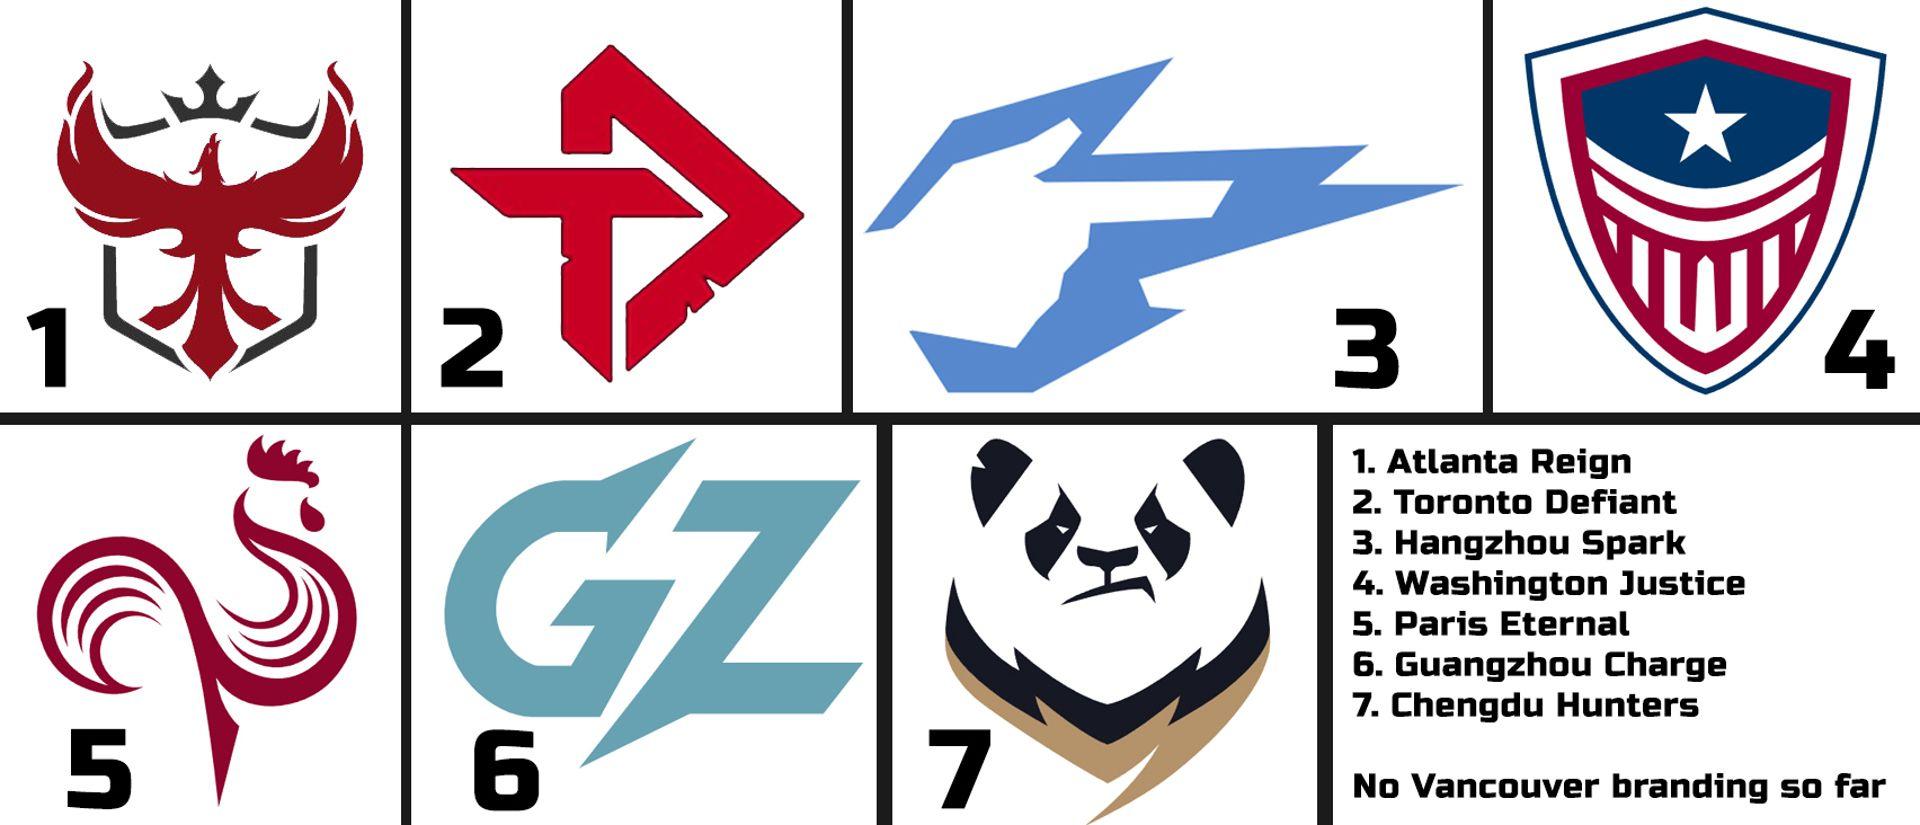 Paris Team Logo - Rumor] Overwatch League Season 2 Team Names & Logos Leaked